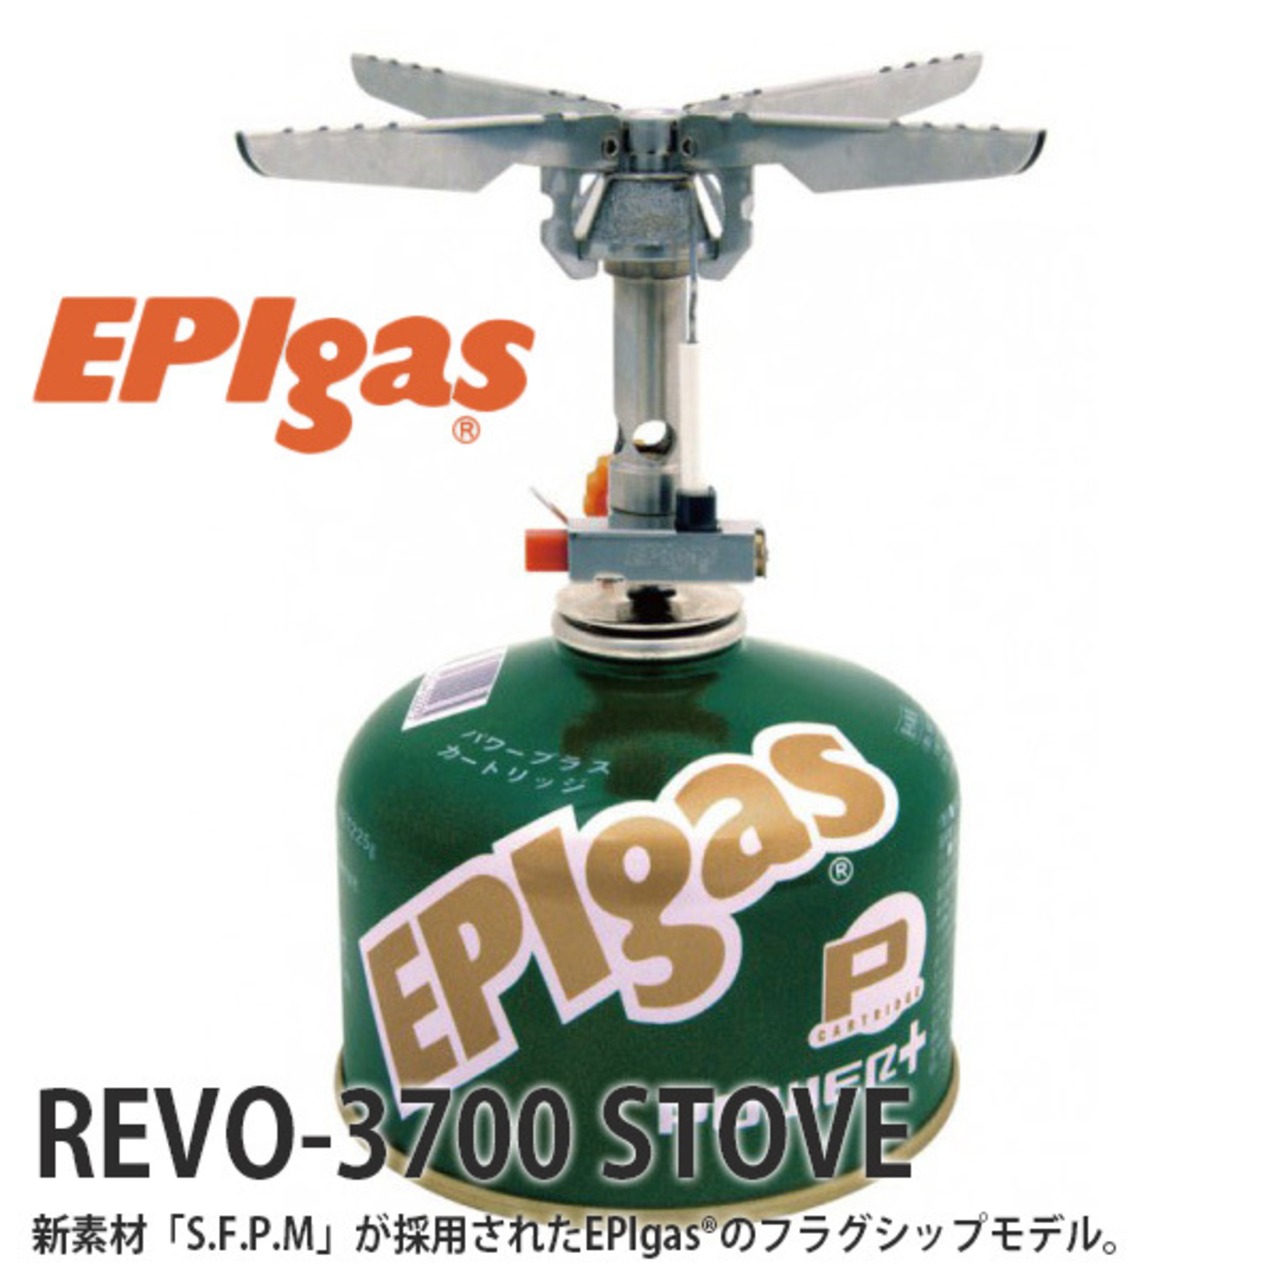 EPIgas(イーピーアイ ガス) REVO-3700 STOVE ストーブ 小型 ガスバーナー コンロ